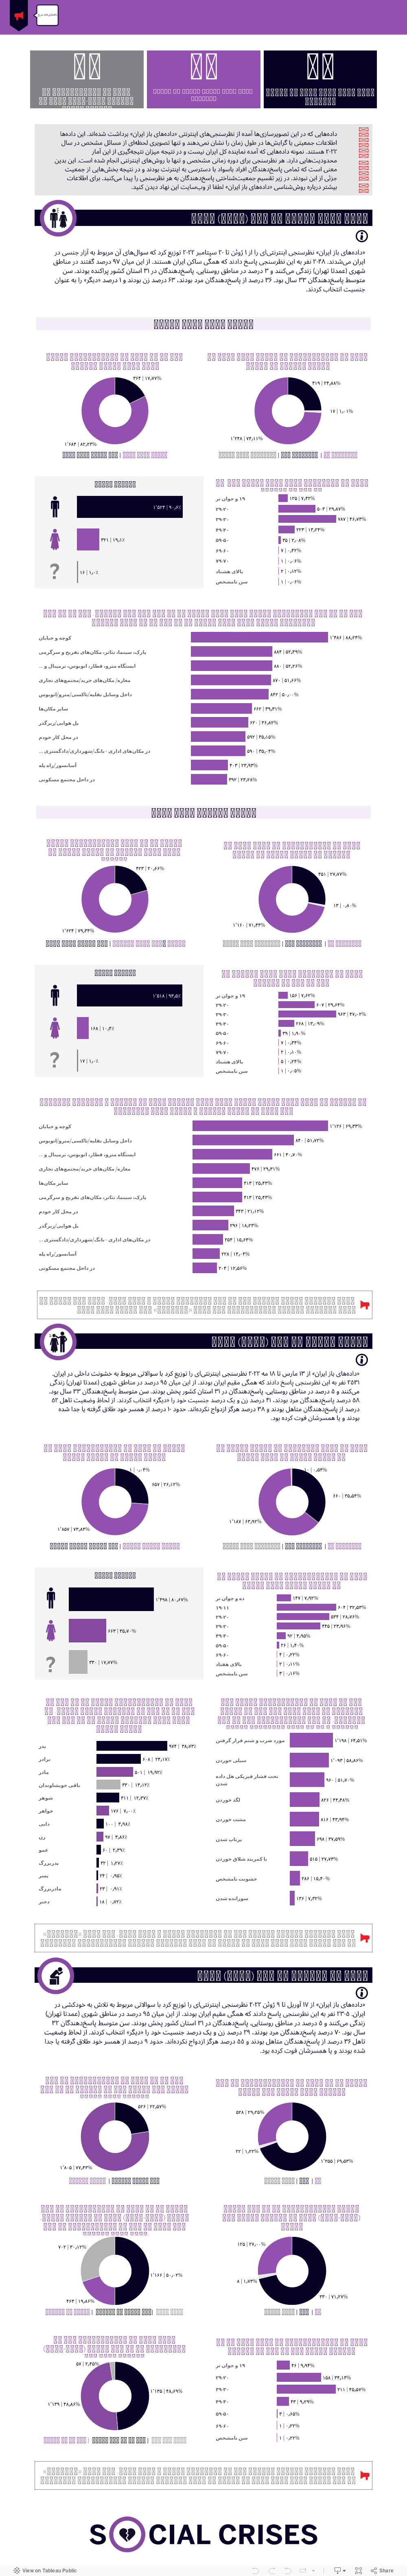 WEBSITE: Social Crises (in Farsi) 